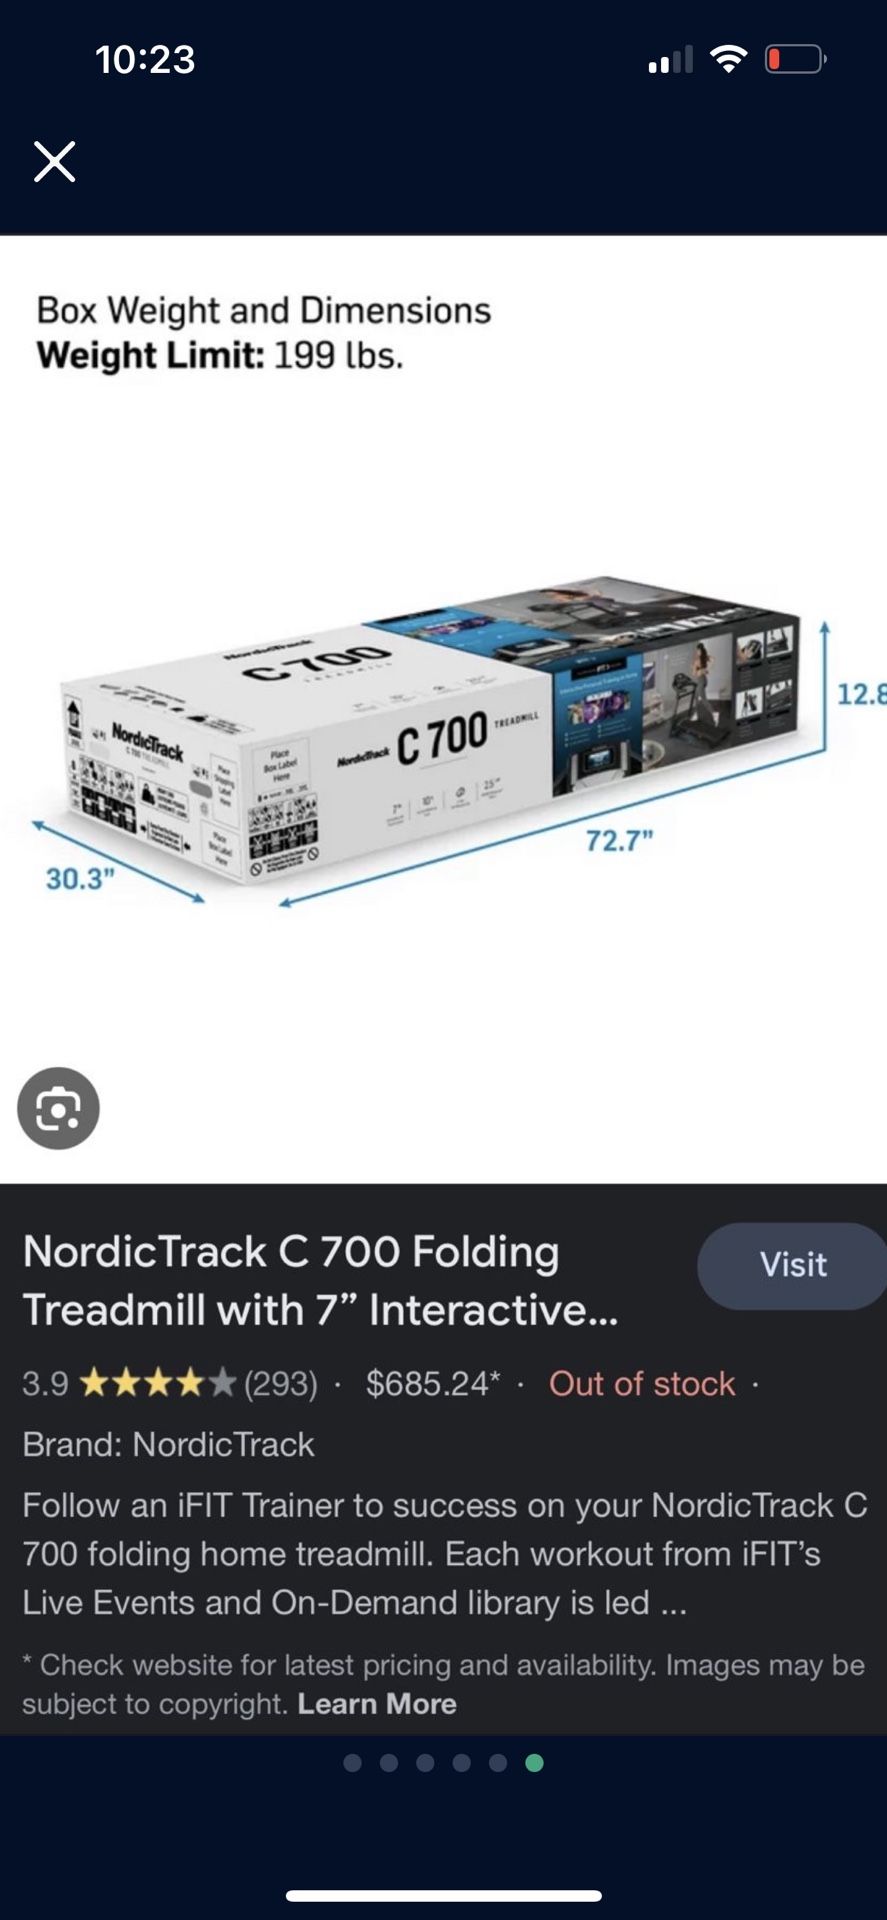 NordicTrack C700 Treadmill 